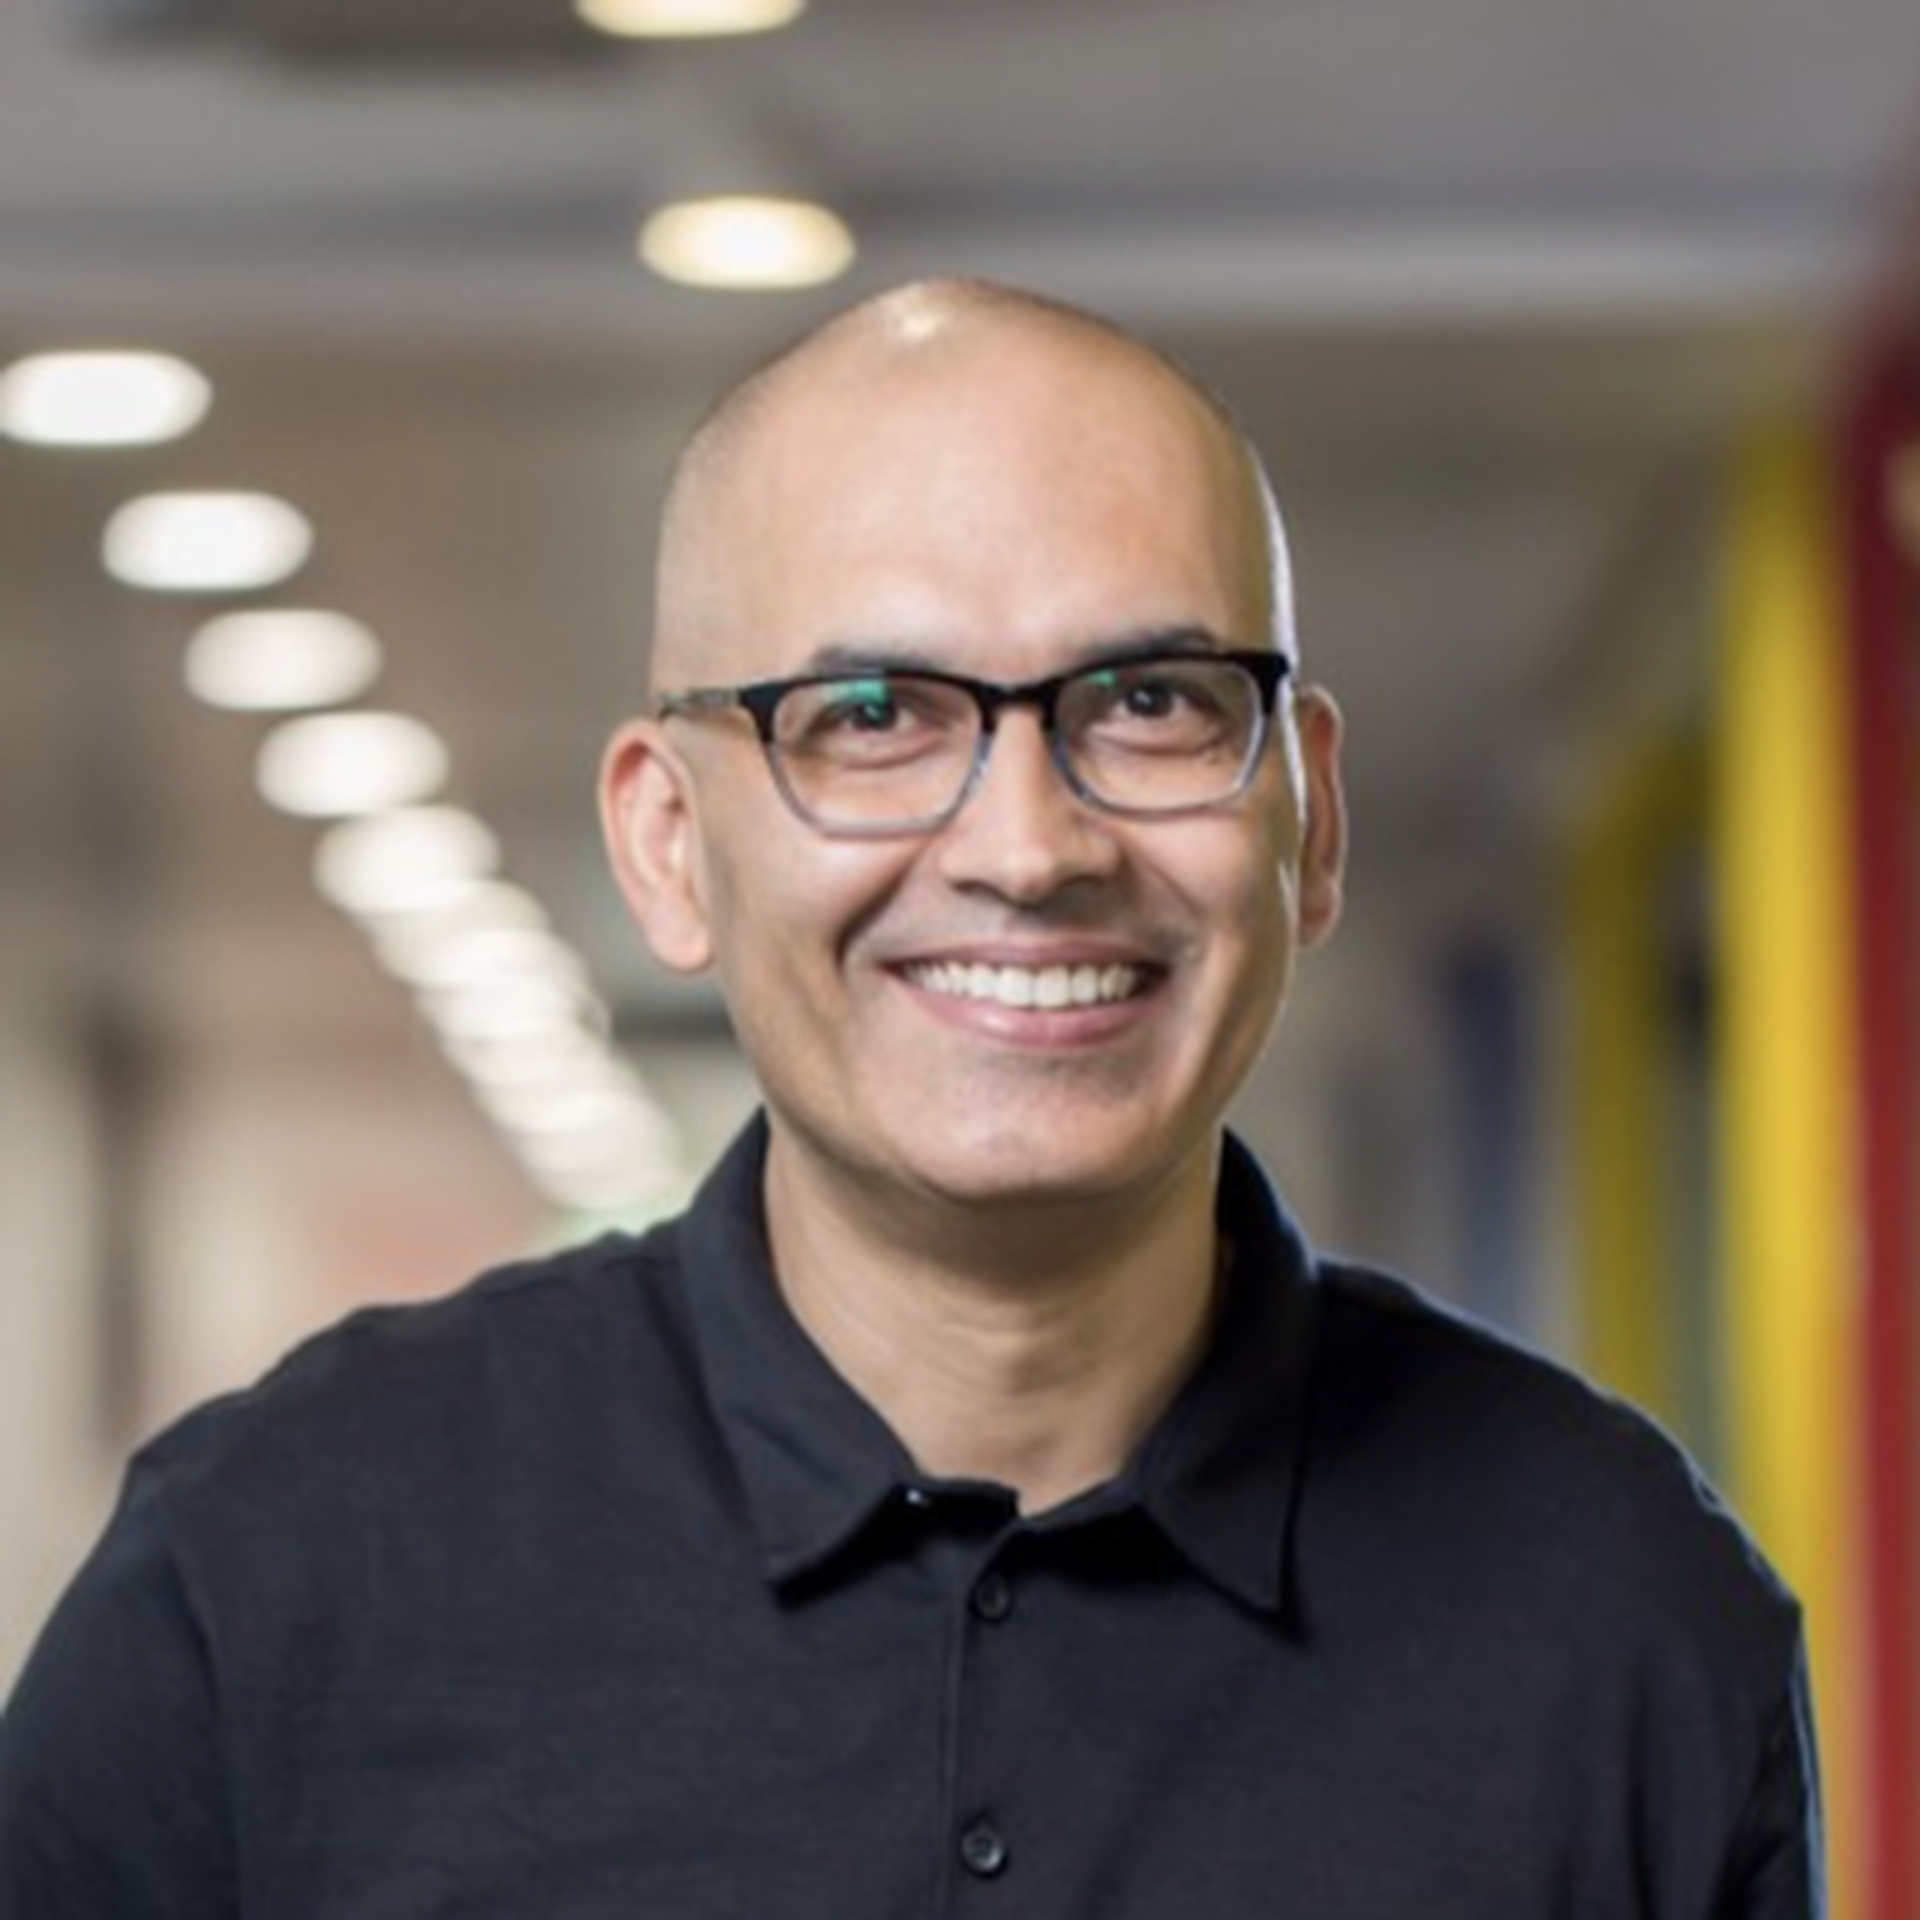 Sanjeev Vohra, global lead for Accenture Applied Intelligence